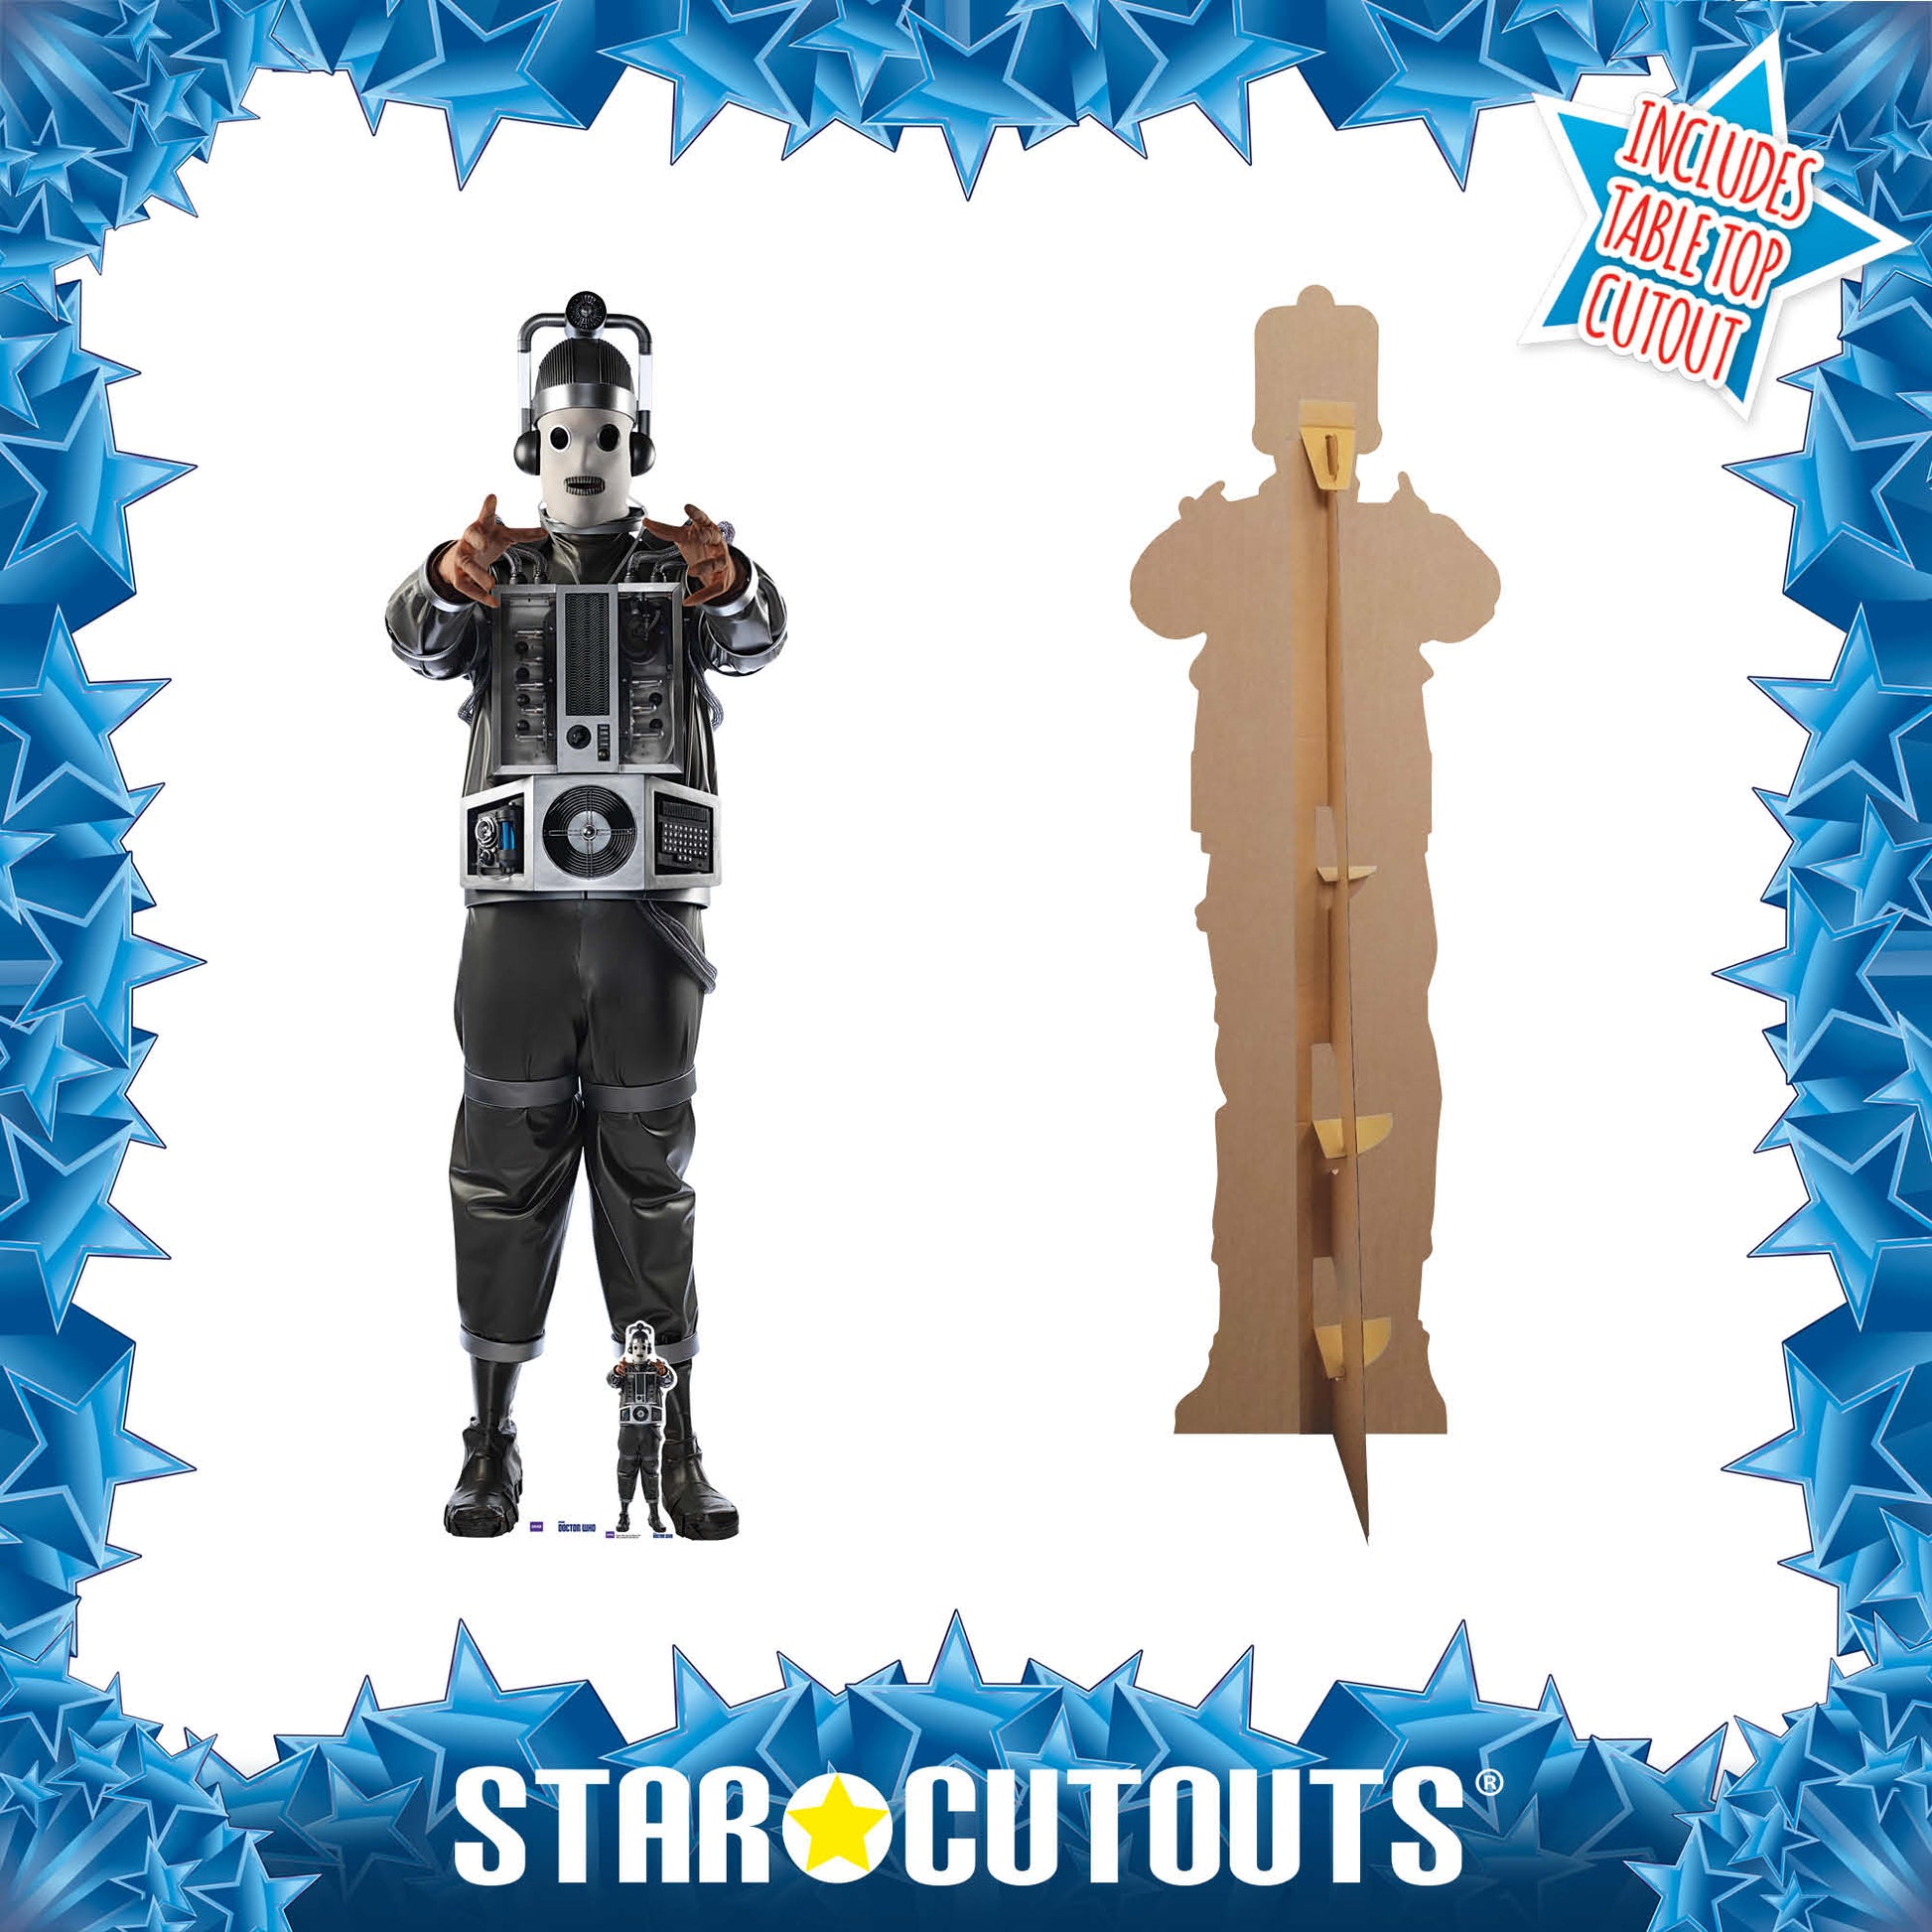 Mondassian Cyberman Cardboard Cut Out Height 190cm - Star Cutouts